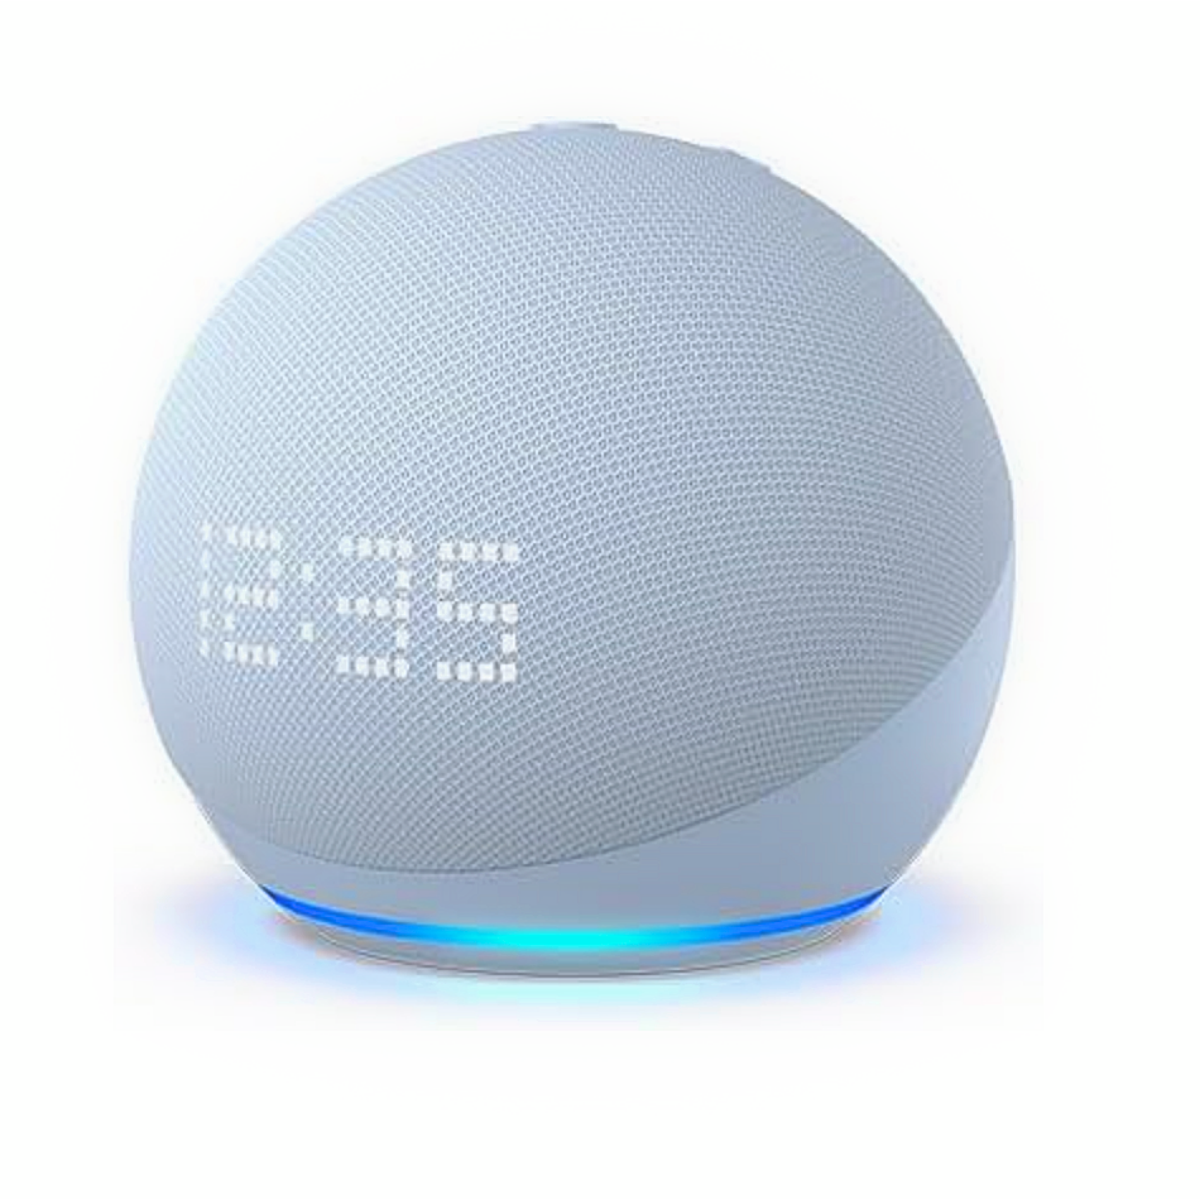 An 5th-Gen Amazon Echo Dot